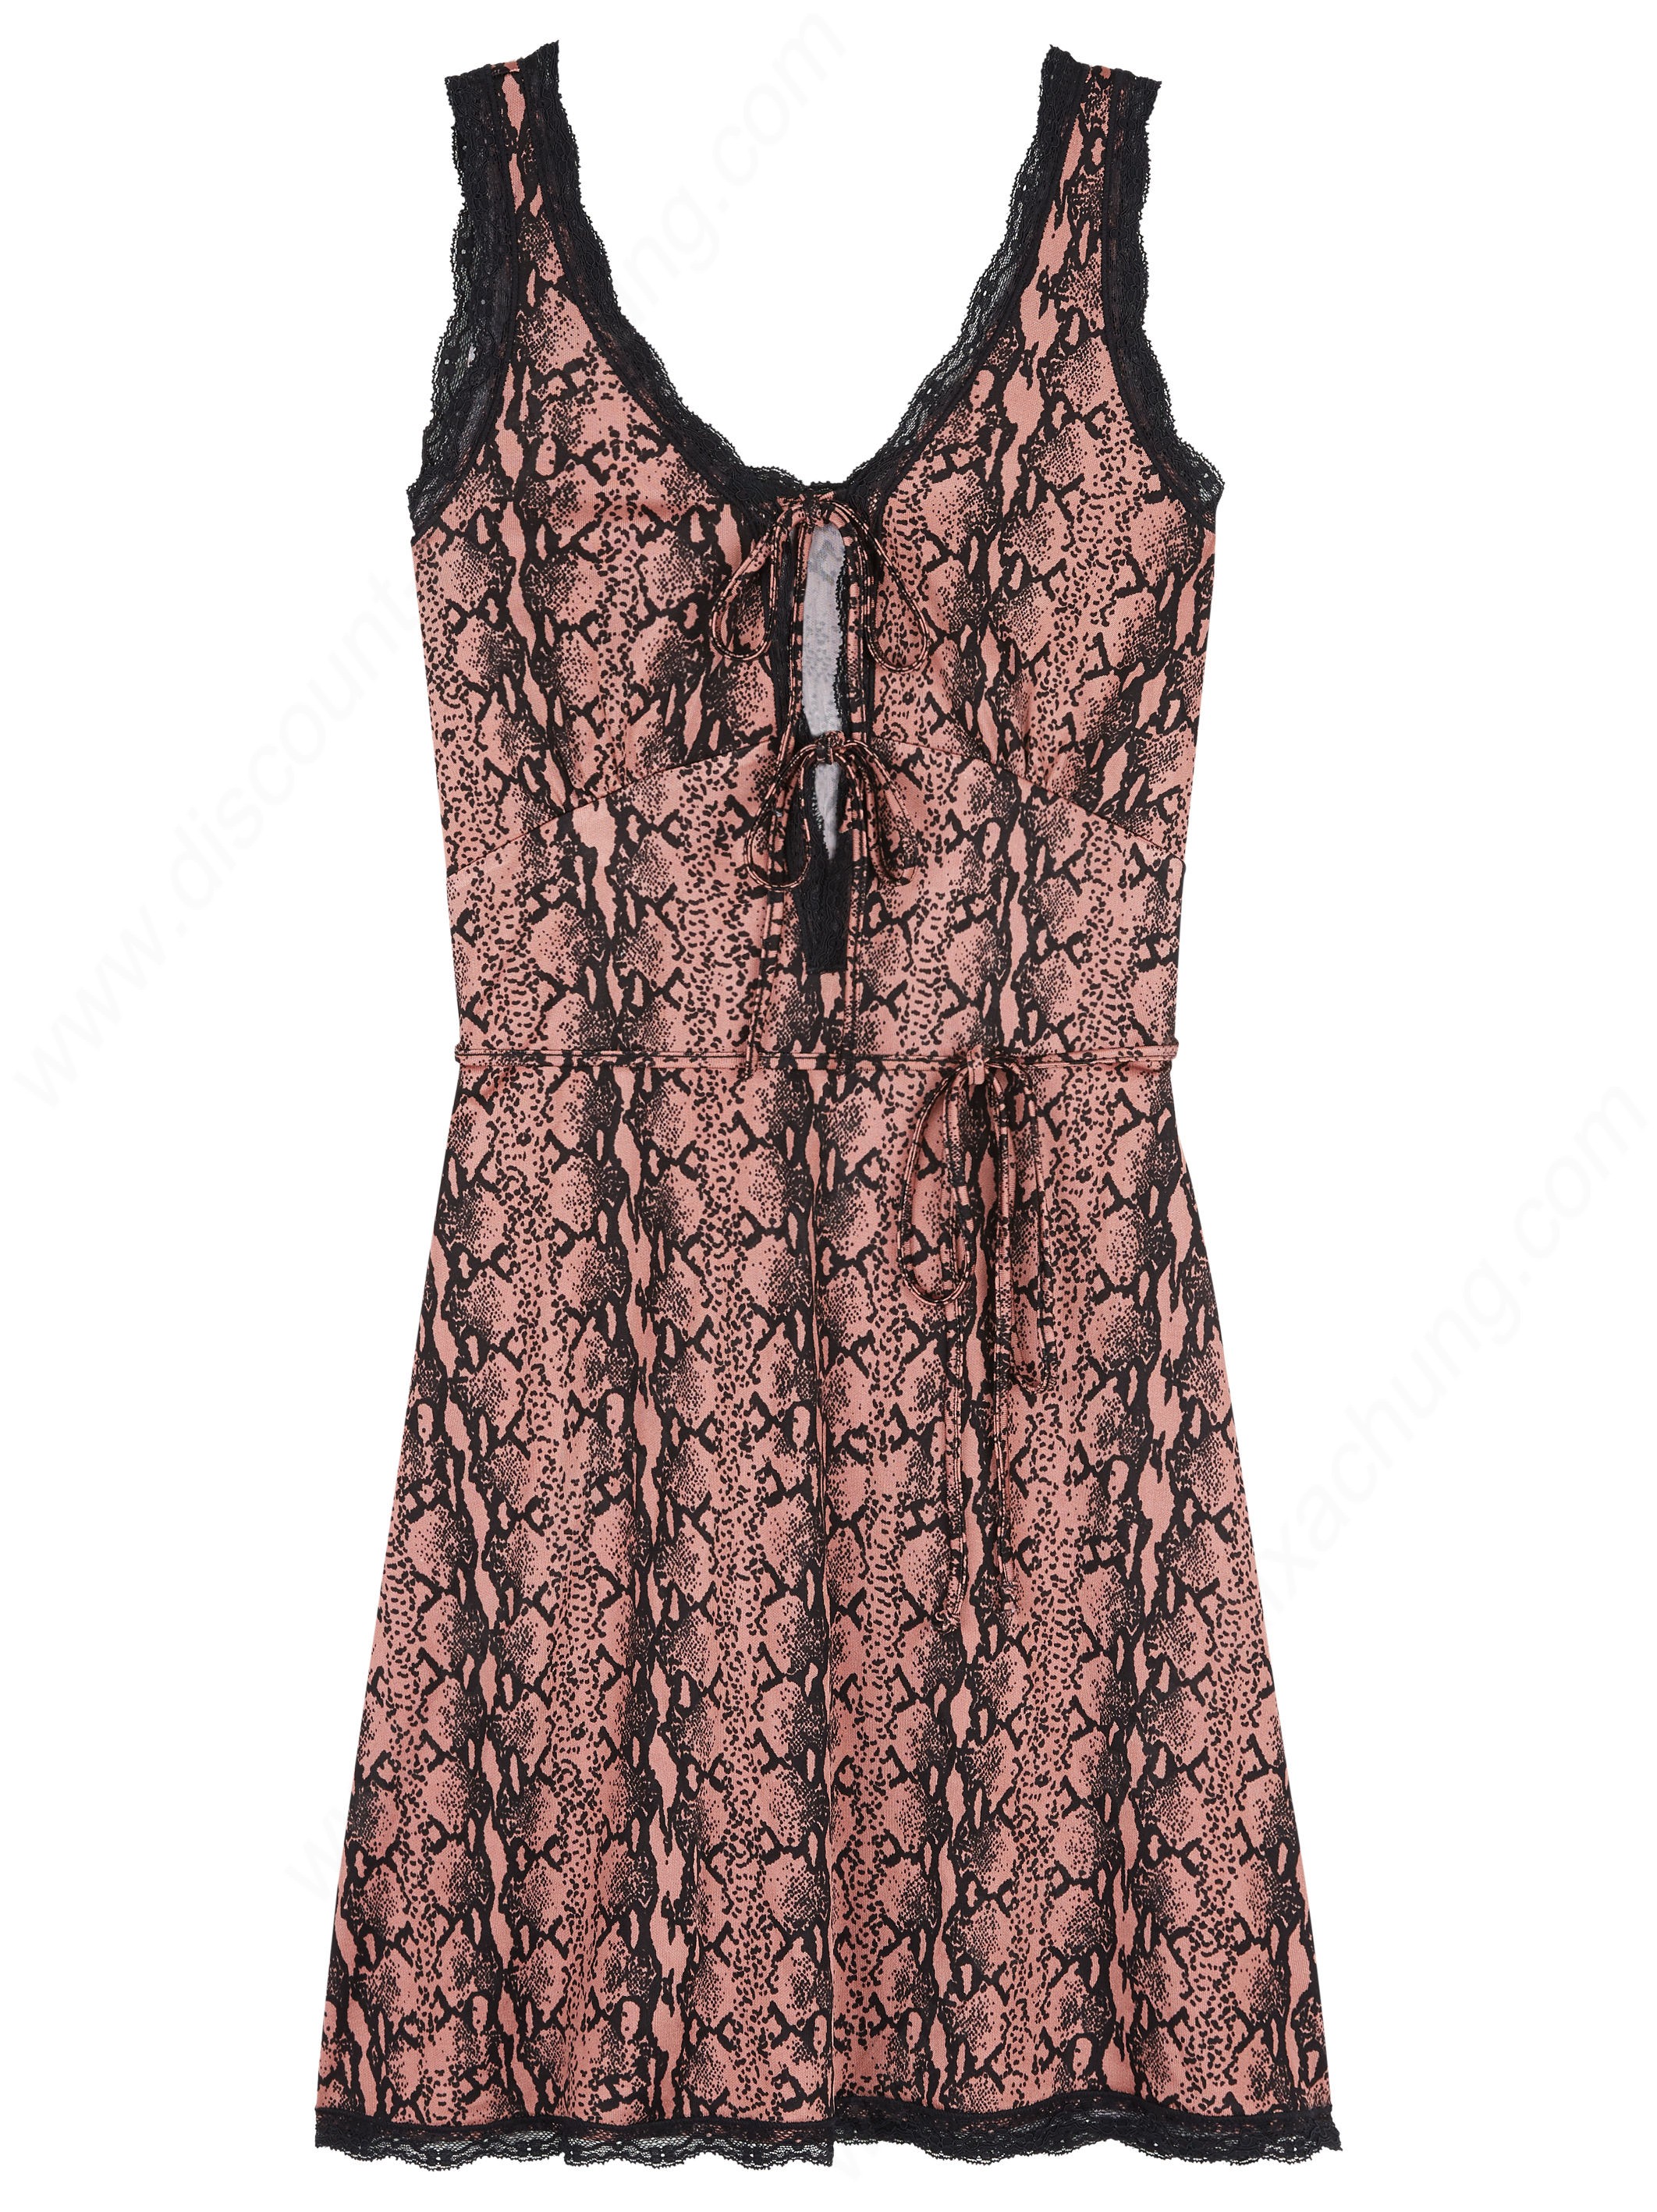 Alexachung Lace Trim Mini Dress - Alexachung Lace Trim Mini Dress